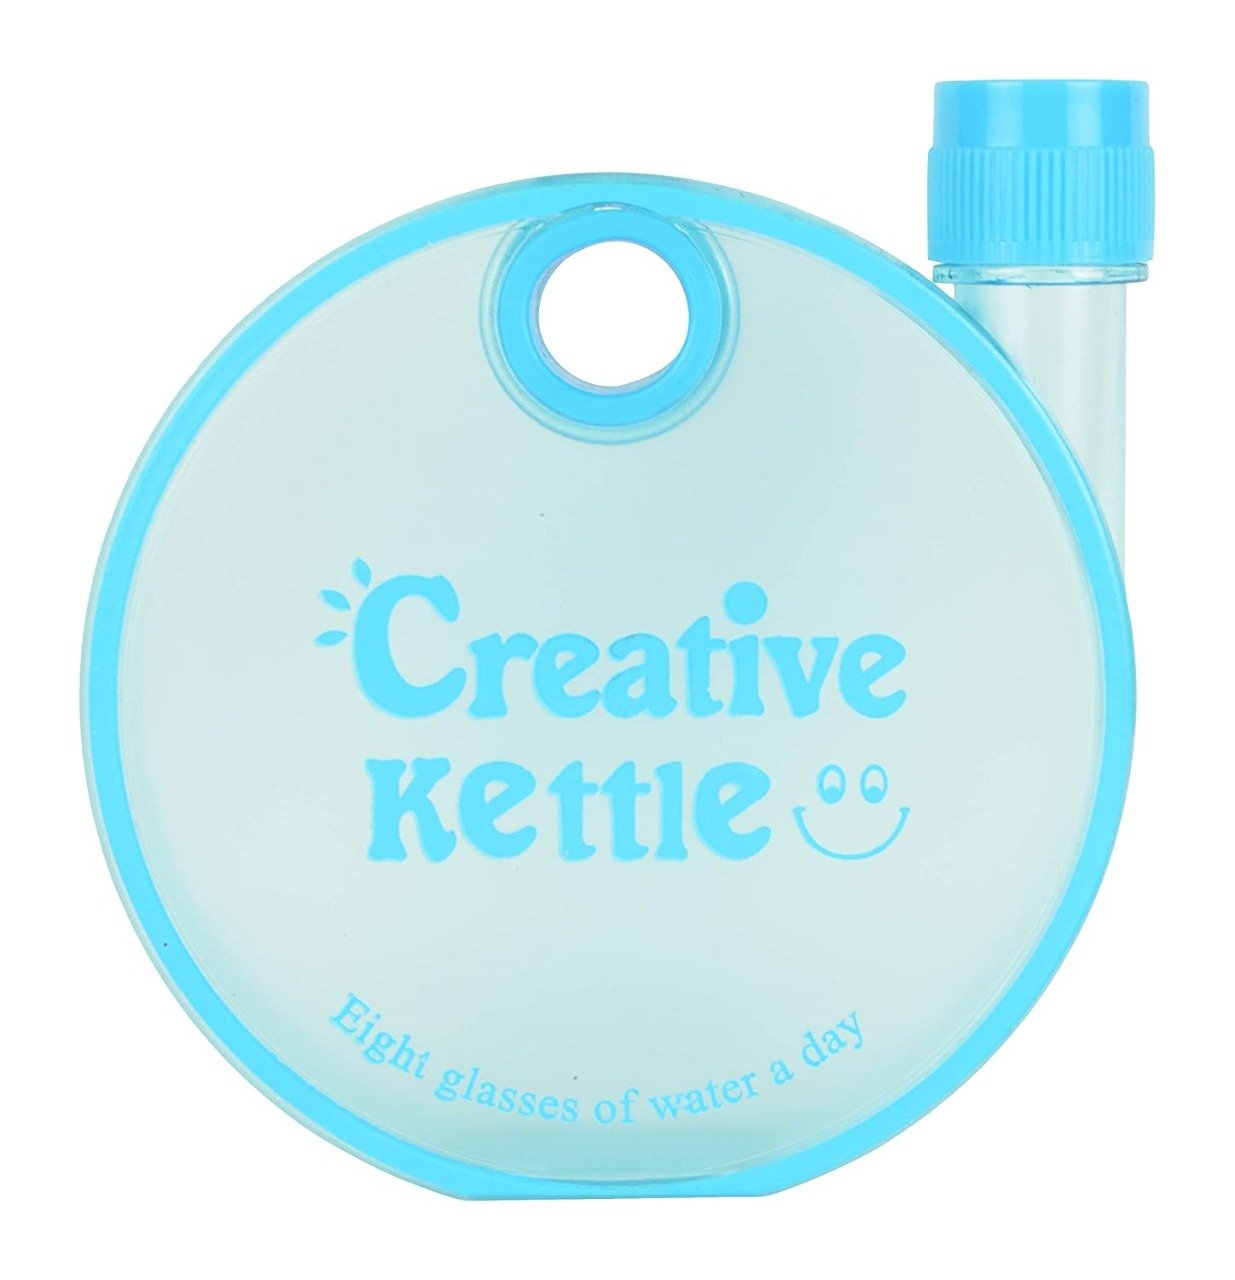 1385 Portable Reusable Creative Kettle Bottle for Travel (350 ml) - SkyShopy